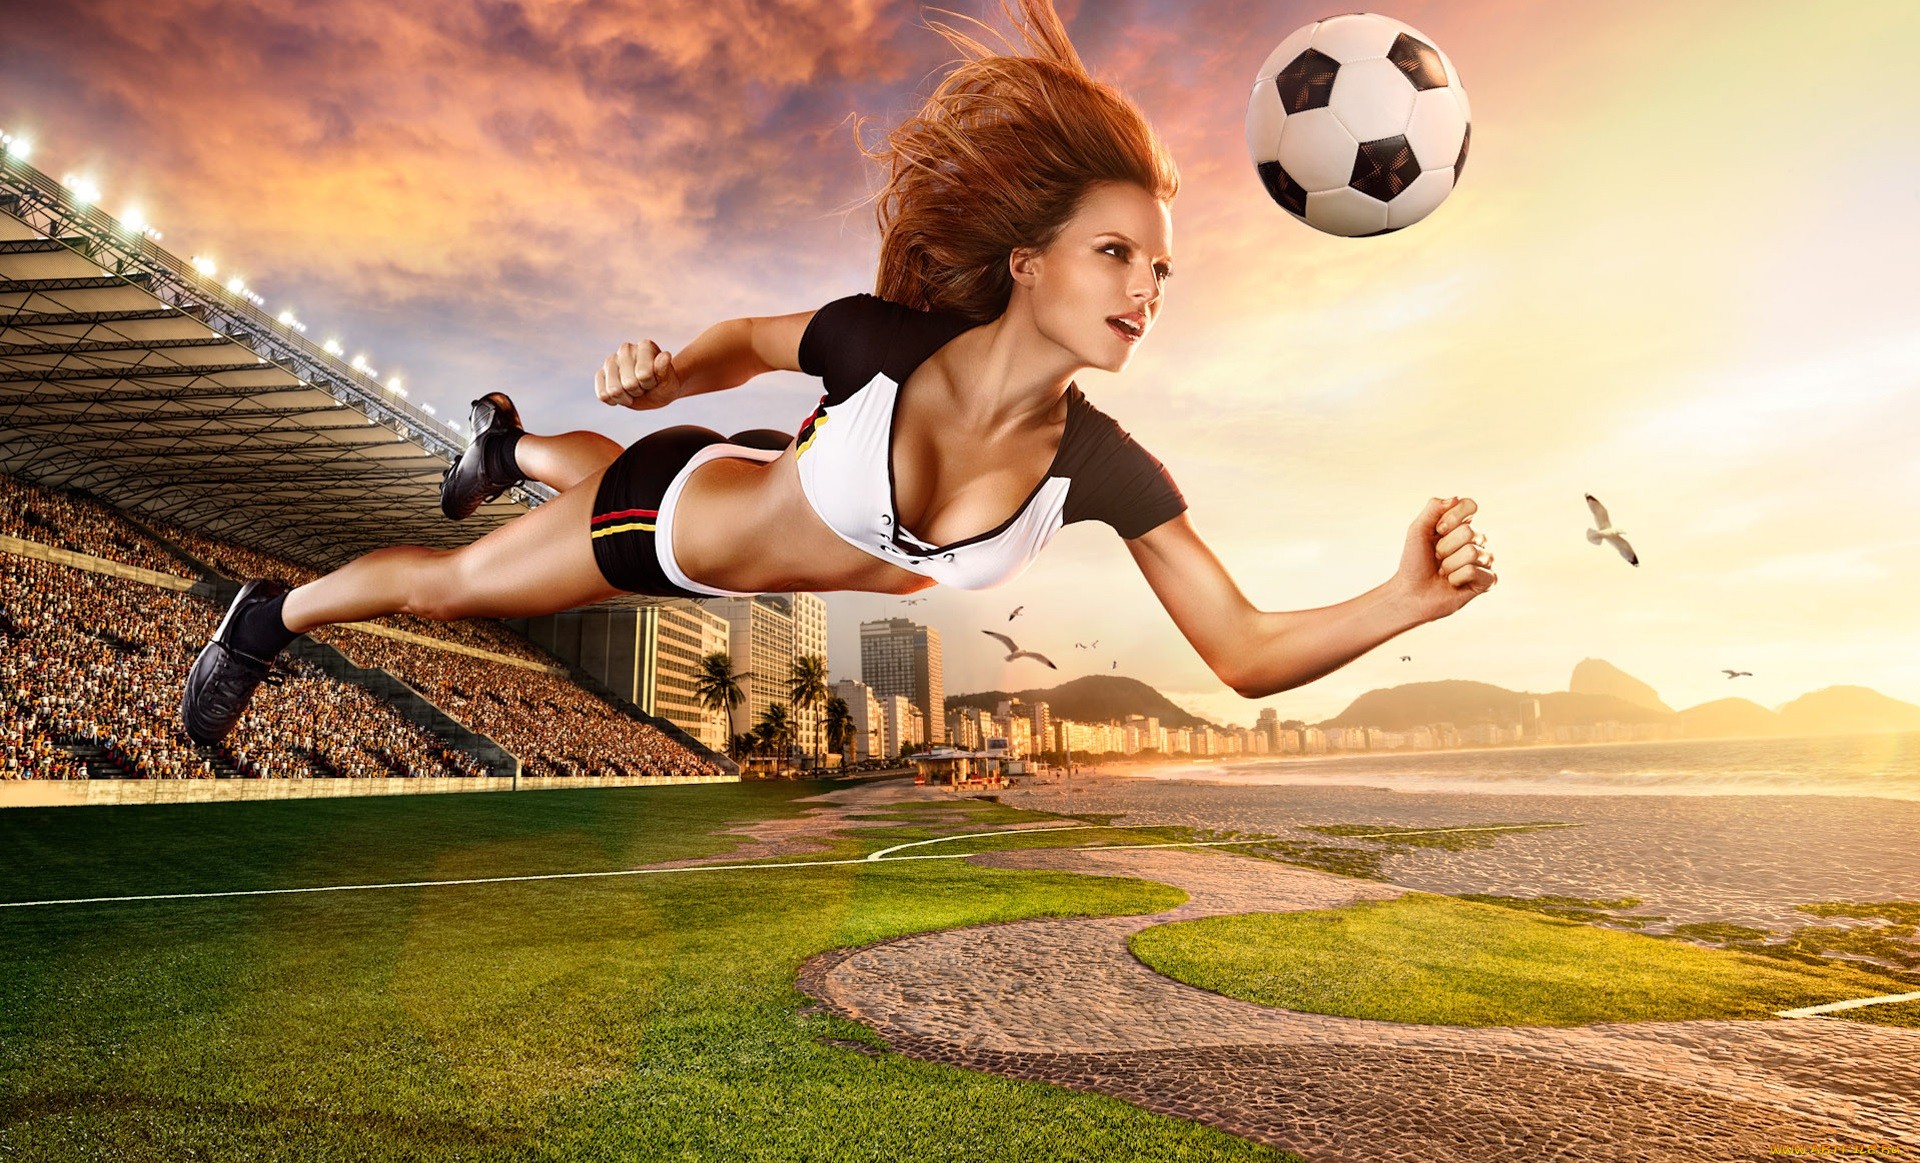 Digital Art Women Model Balls Sport Soccer Ball Soccer Girls 1920x1163